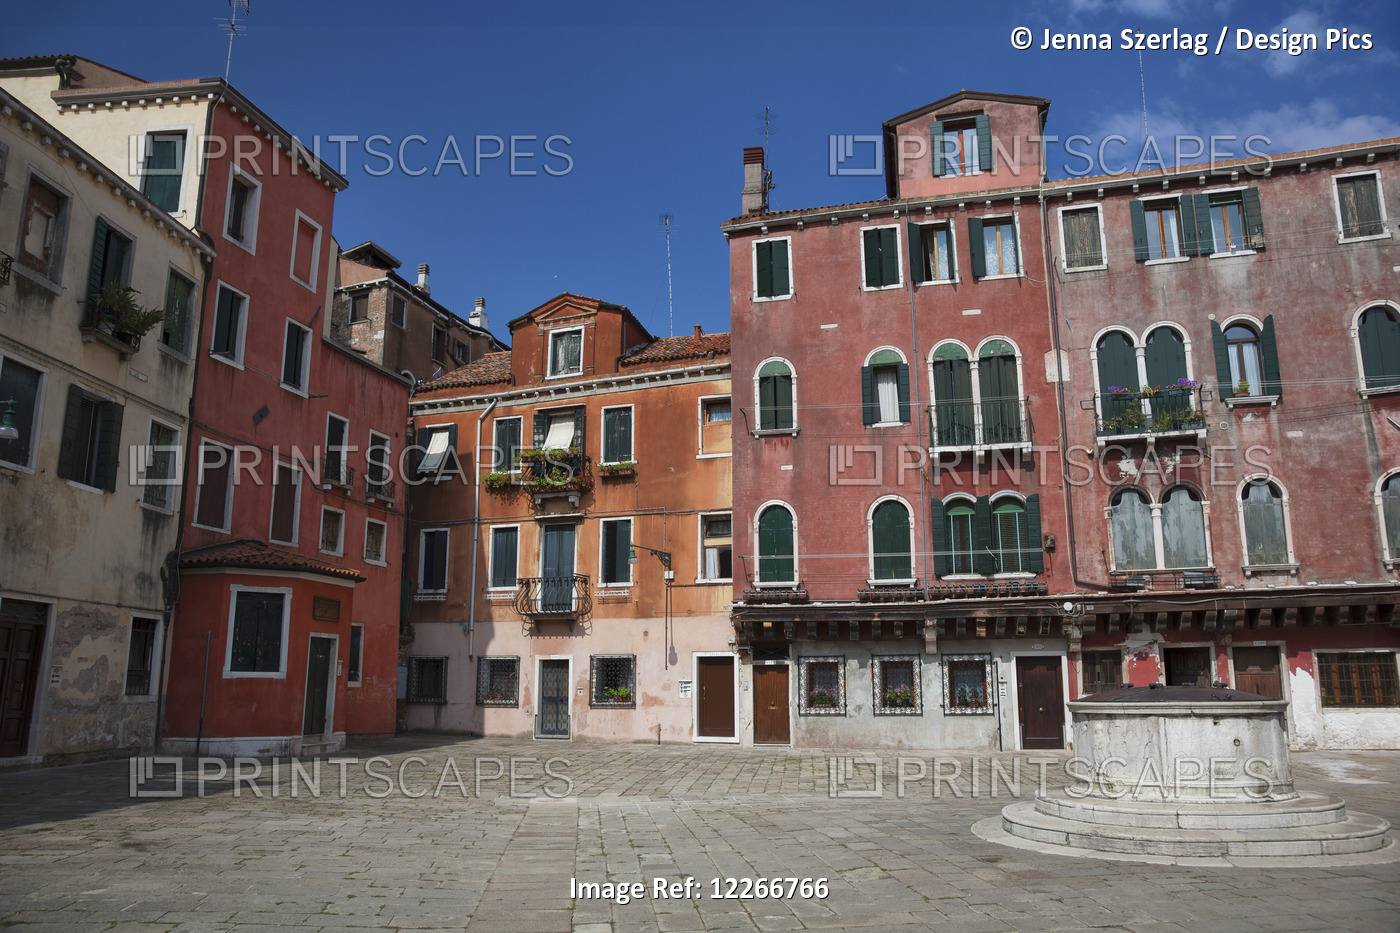 Campo San Polo Square With Blue Sky; Venice, Italy